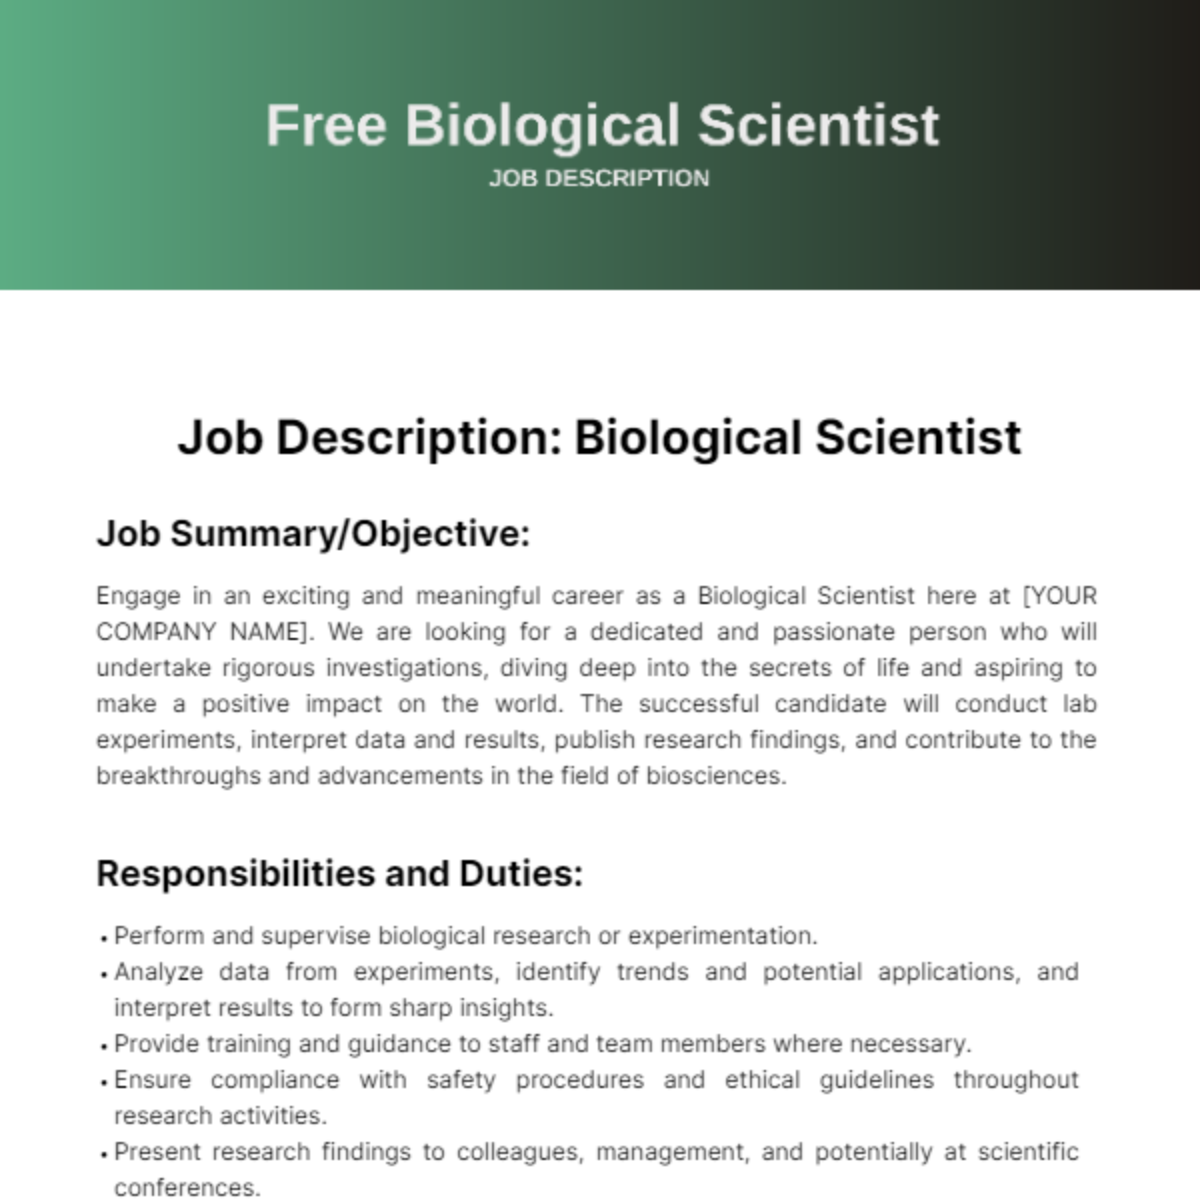 Free Biological Scientist Job Description Template